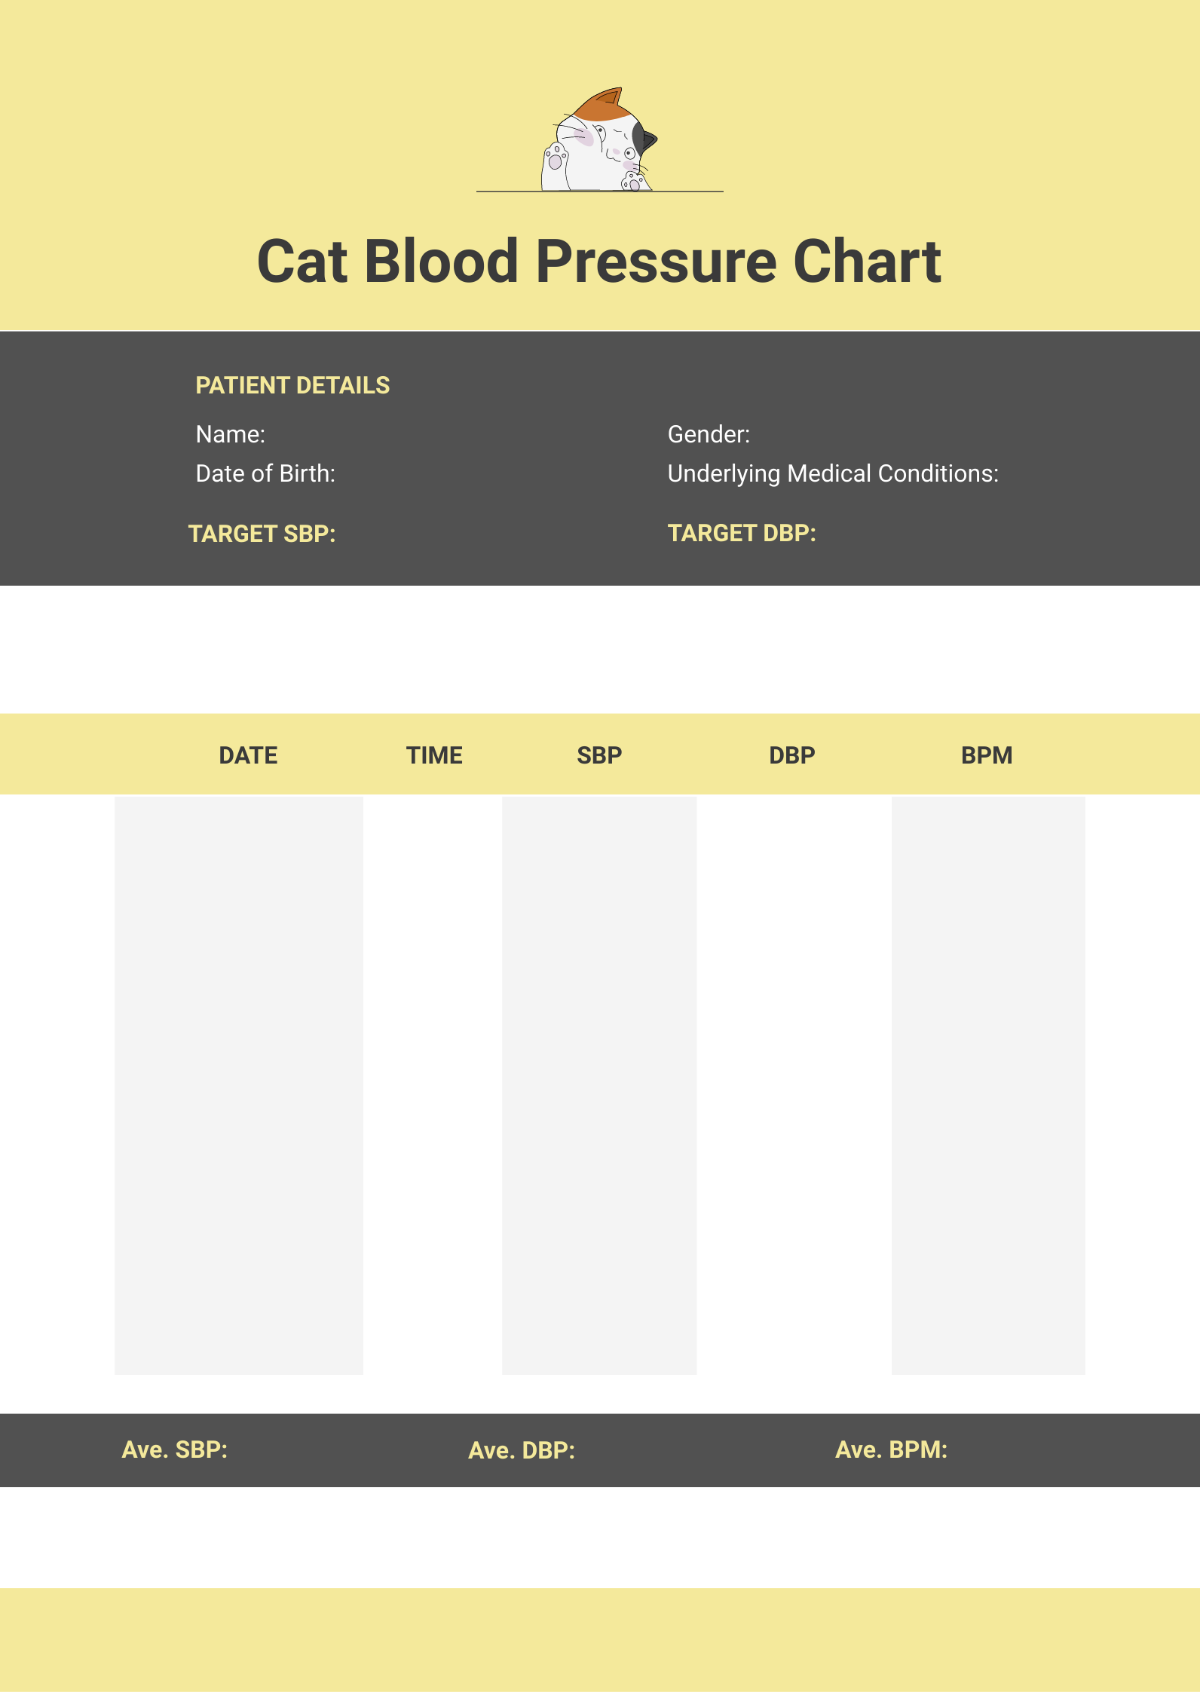 Cat Blood Pressure Chart Template